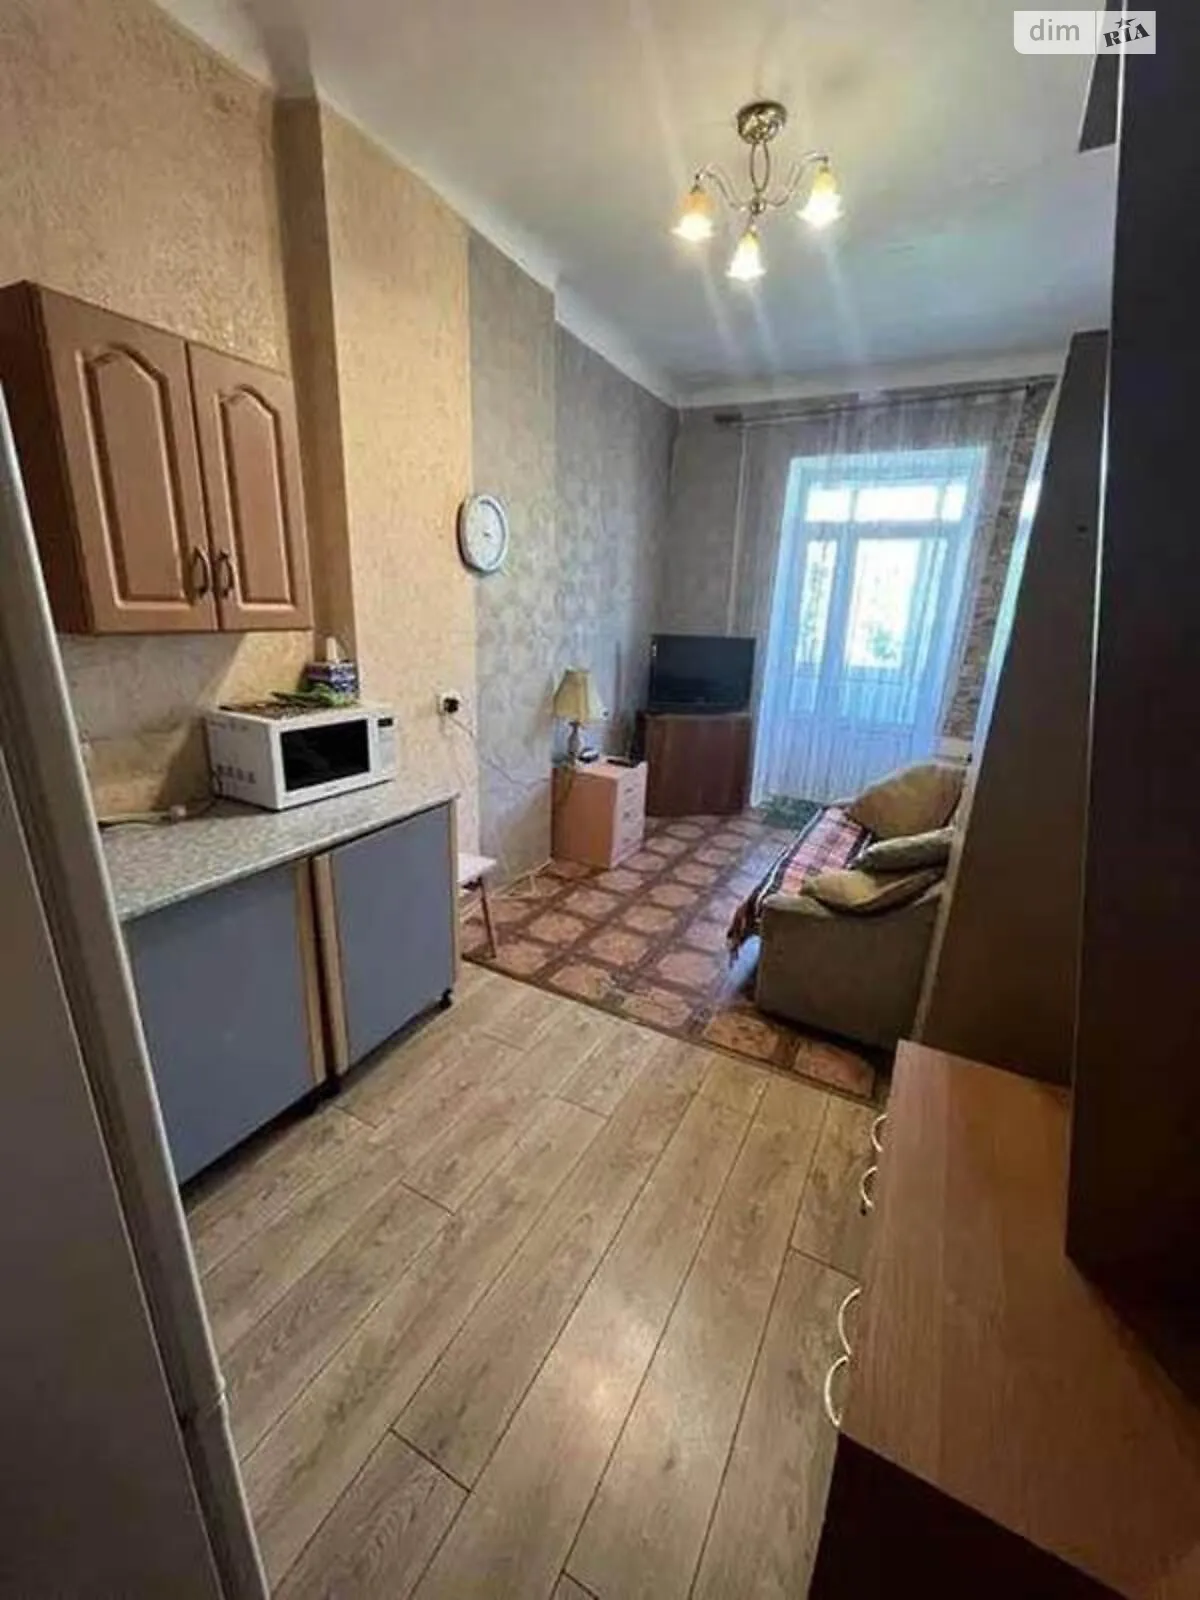 Продается комната 20 кв. м в Киеве, цена: 14900 $ - фото 1